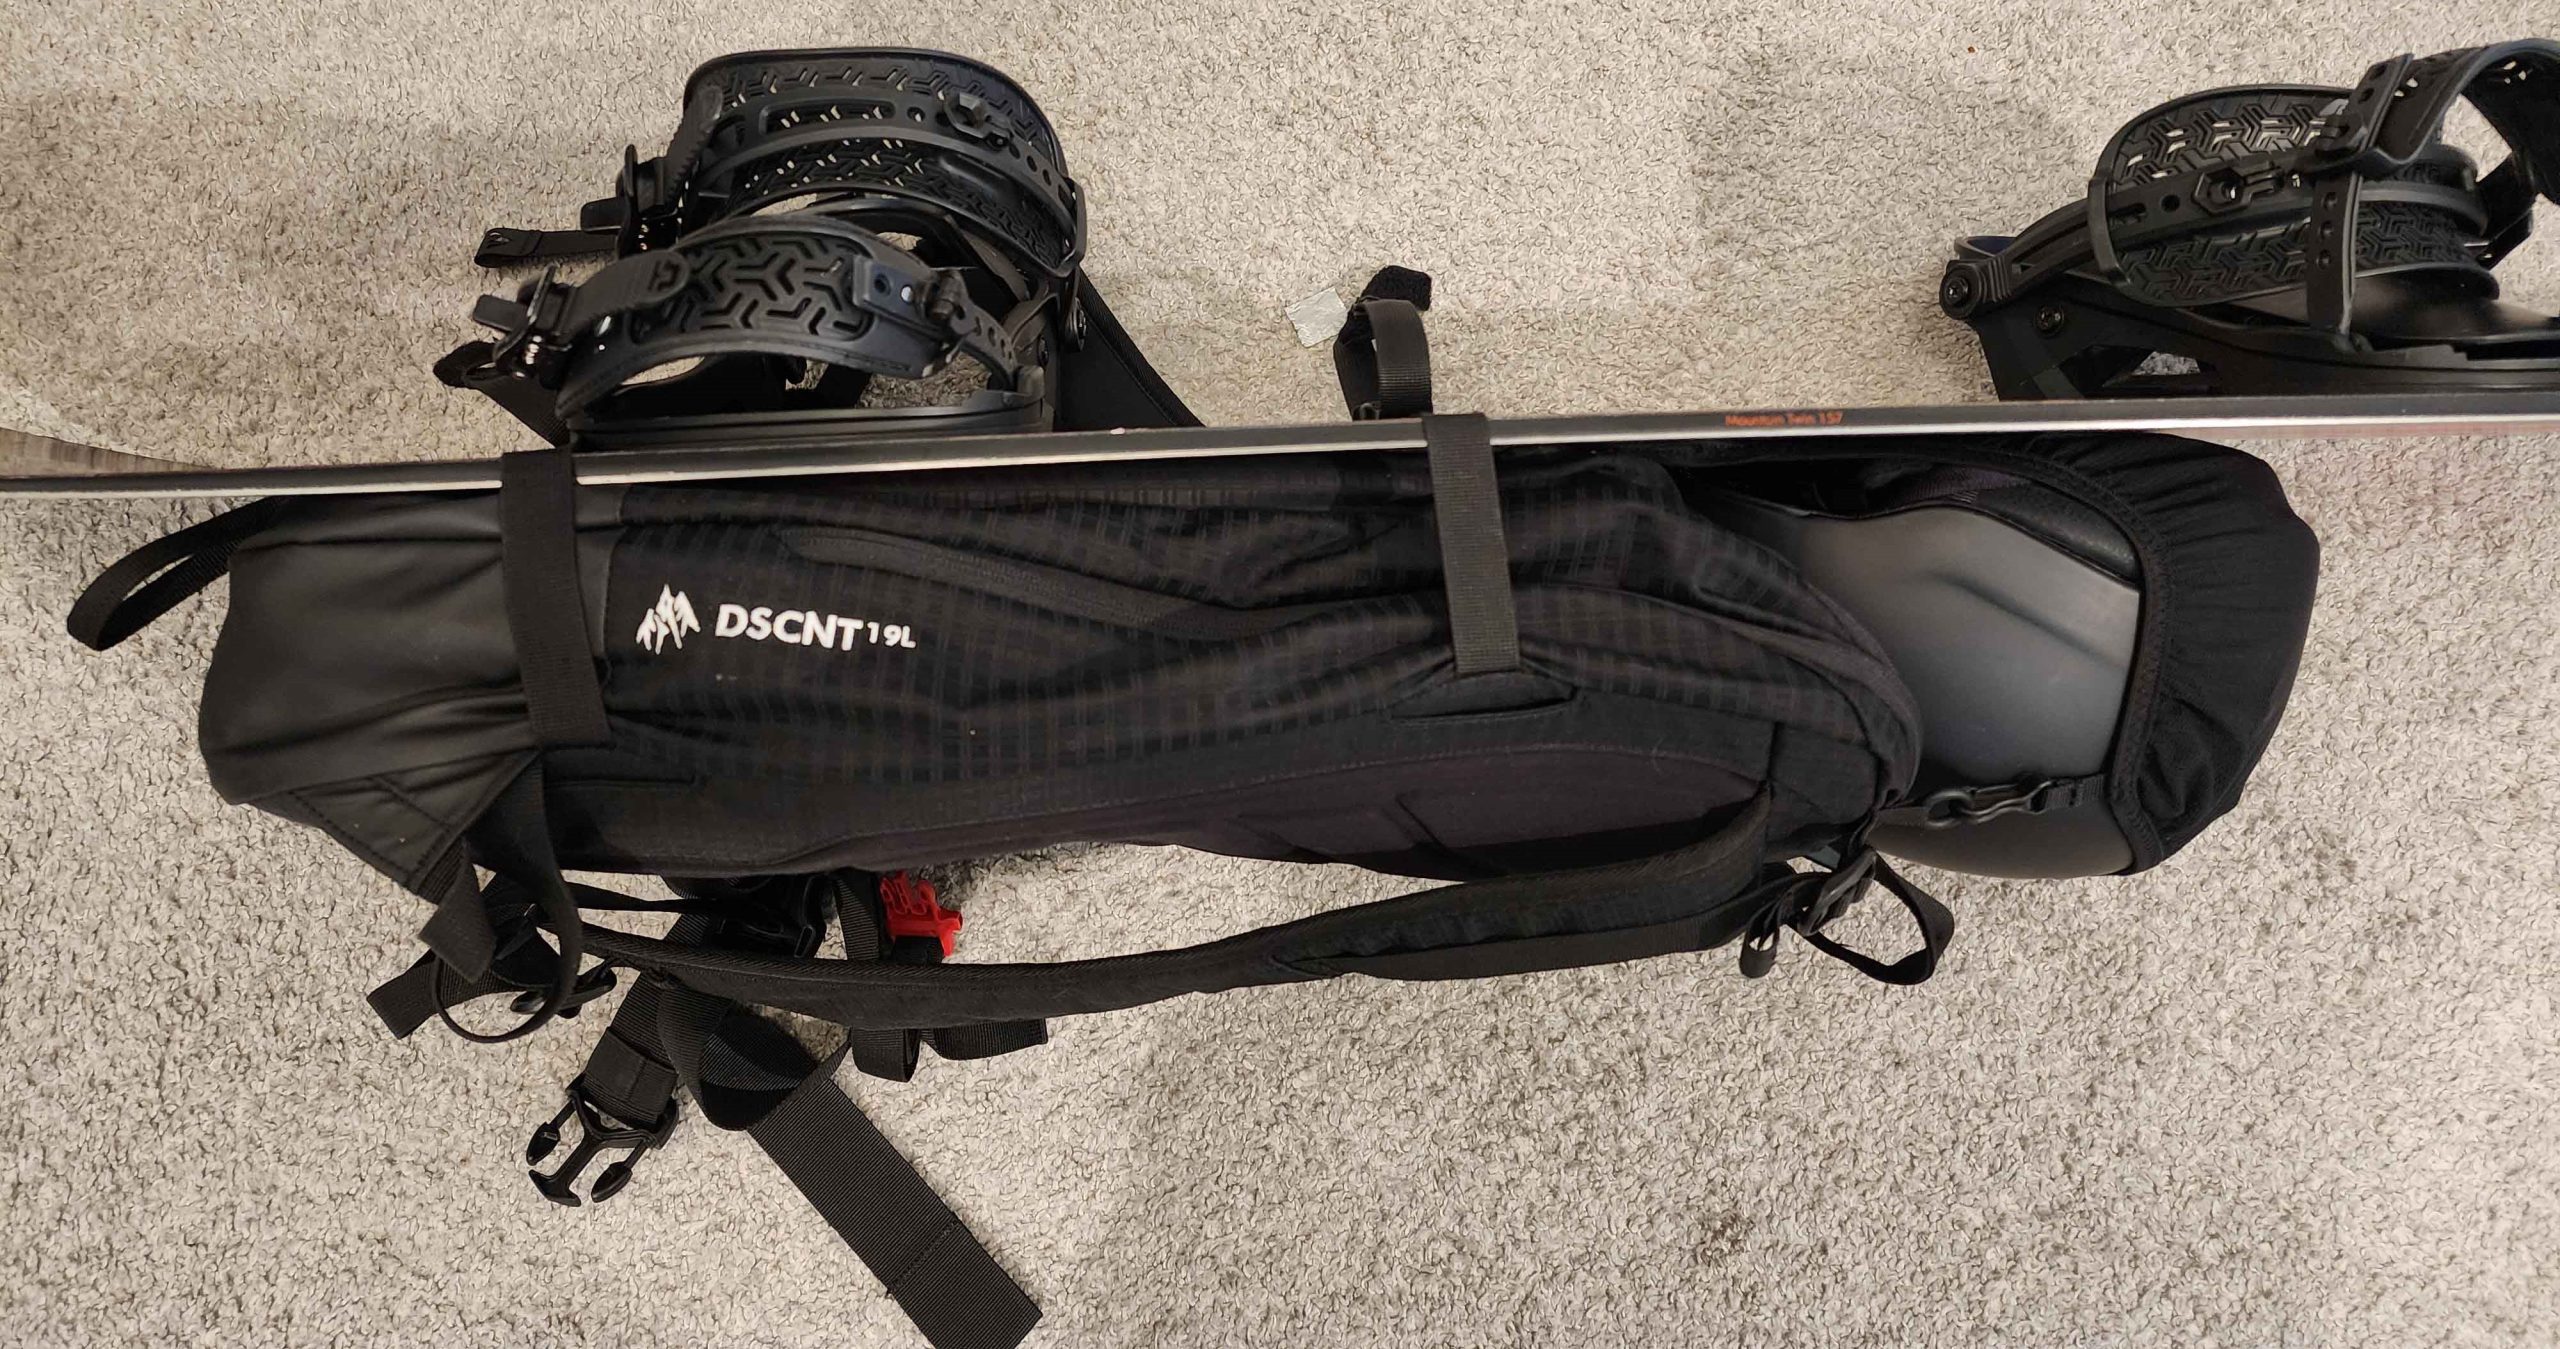 Jones DSCNT 19L 2019-2023 Snowboard Backpack Review